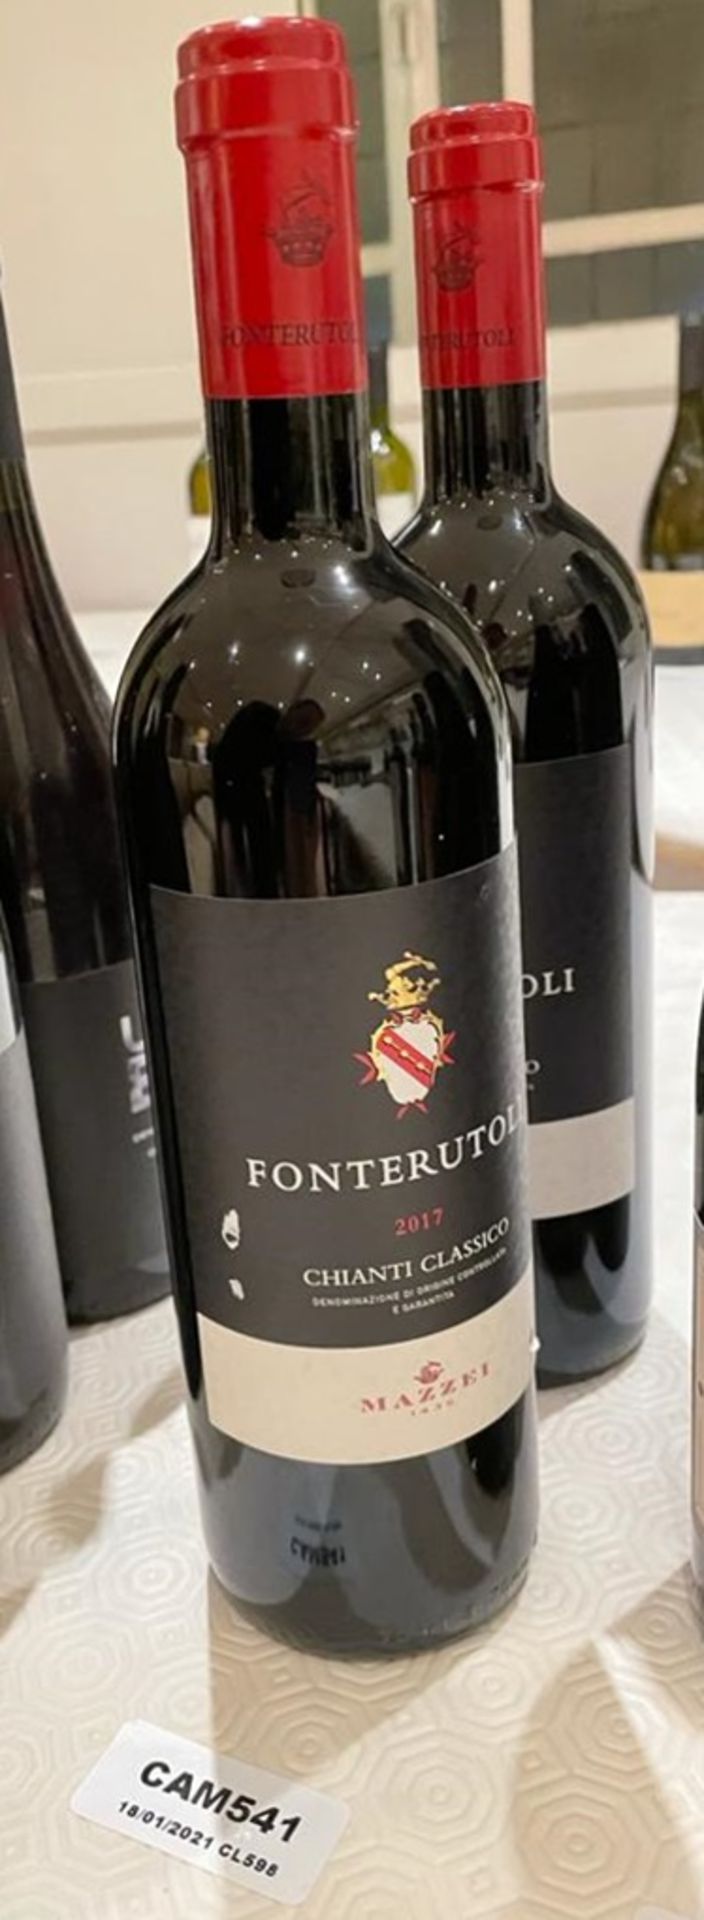 2 x Bottles Of FONTERUTOLI CHIANTI - 2017 - 75cl - New/Unopened Restaurant Stock - Ref: CAM541 - Image 2 of 2